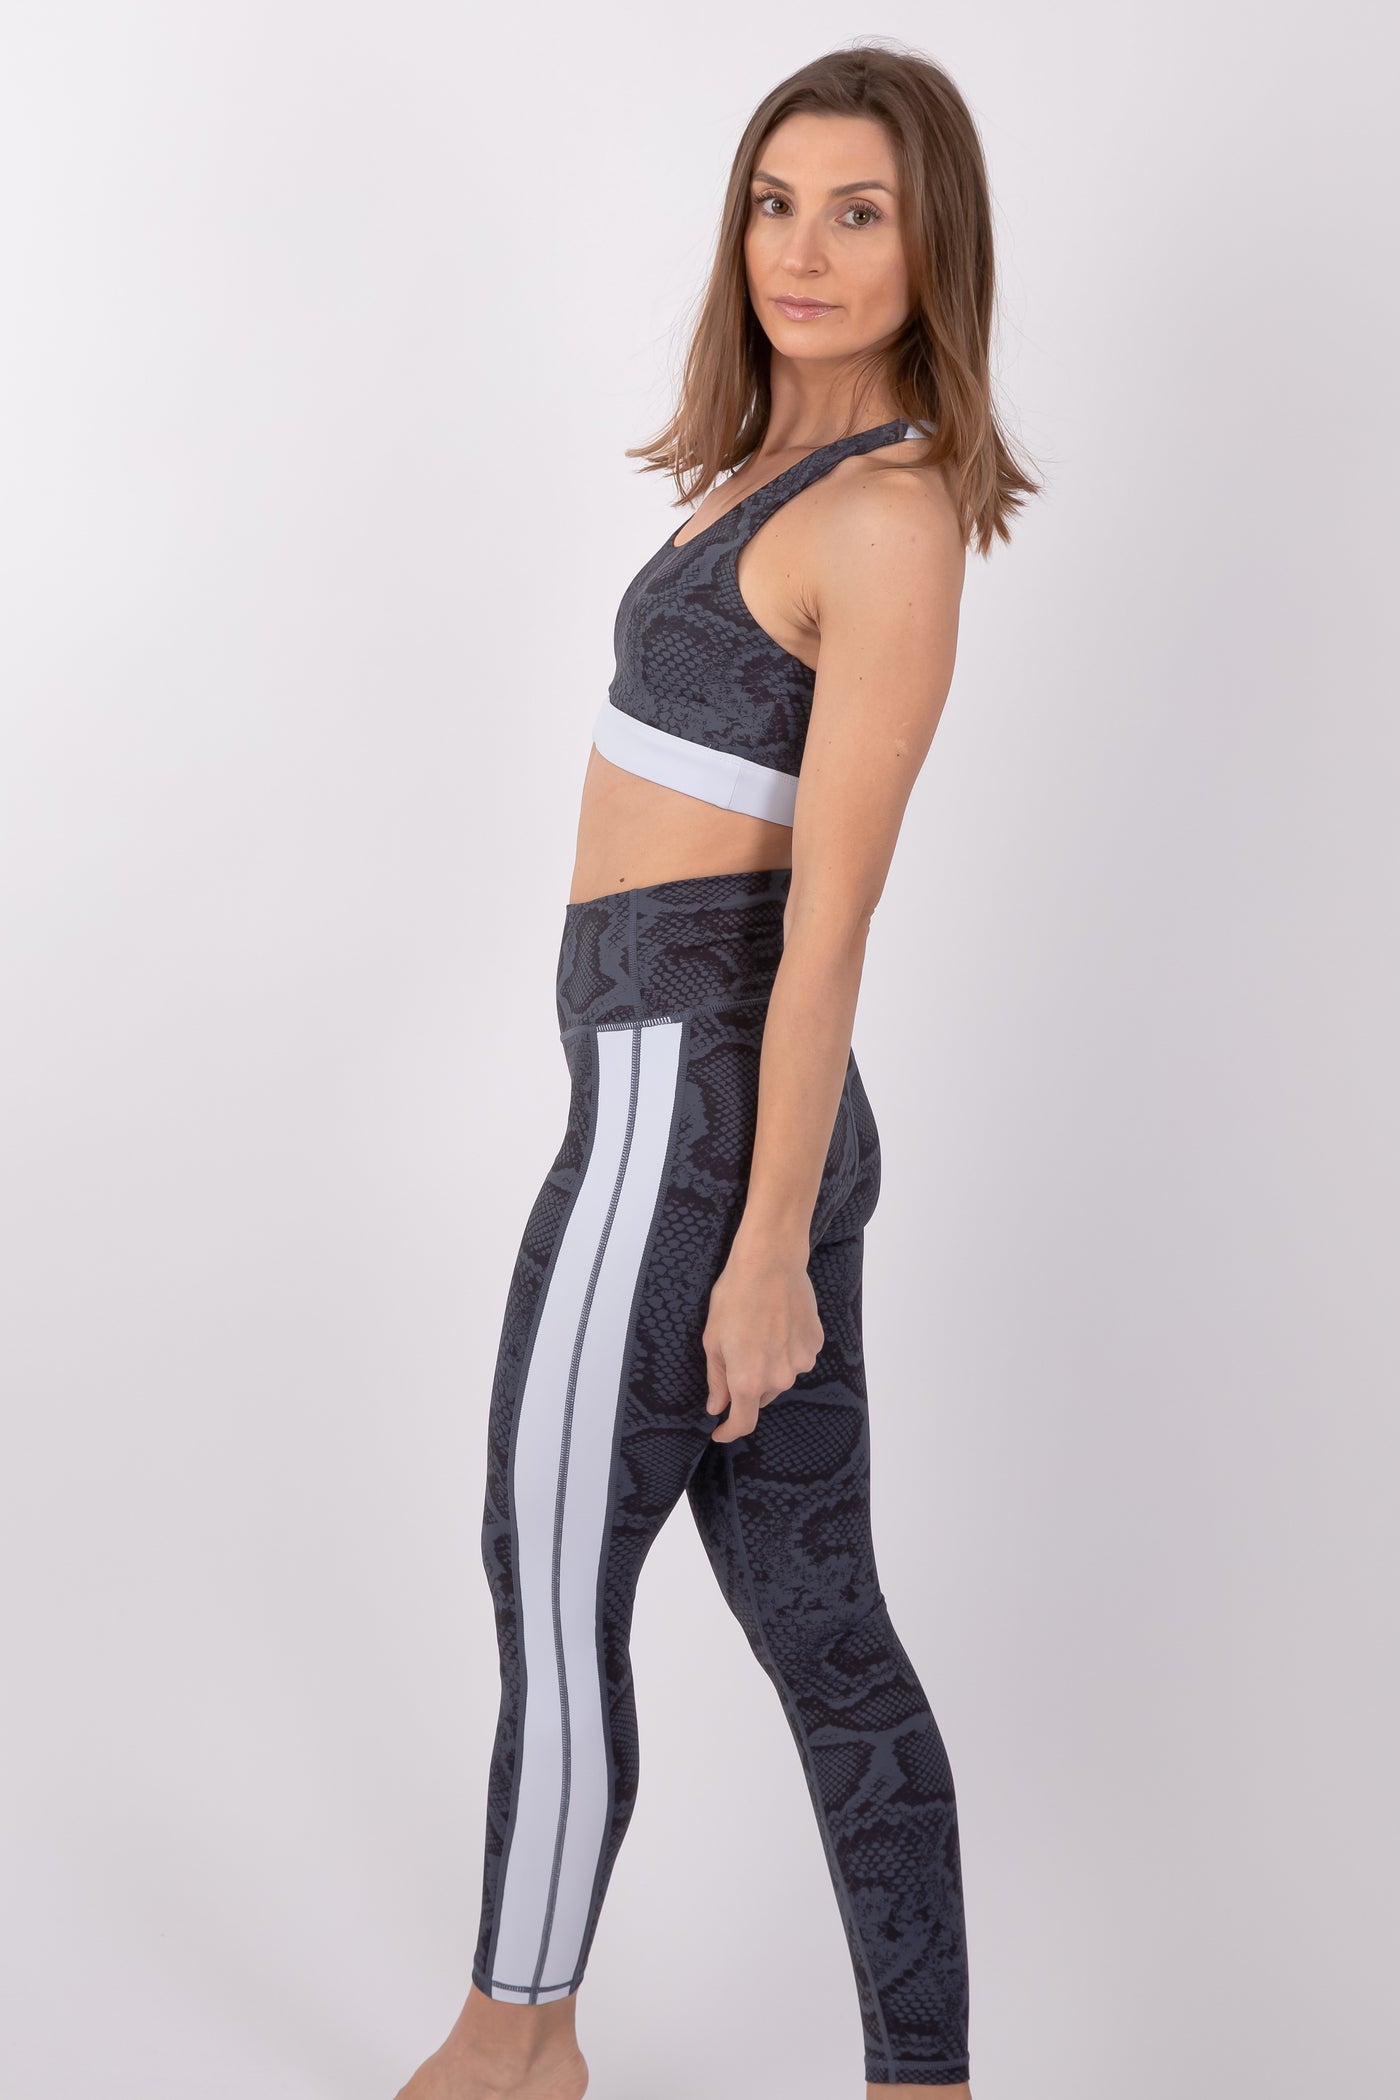 Let's Do snake-print white stripe Legging - Shop women's workout apparel online | Leggings, hoodies, Top & bras | bejactive